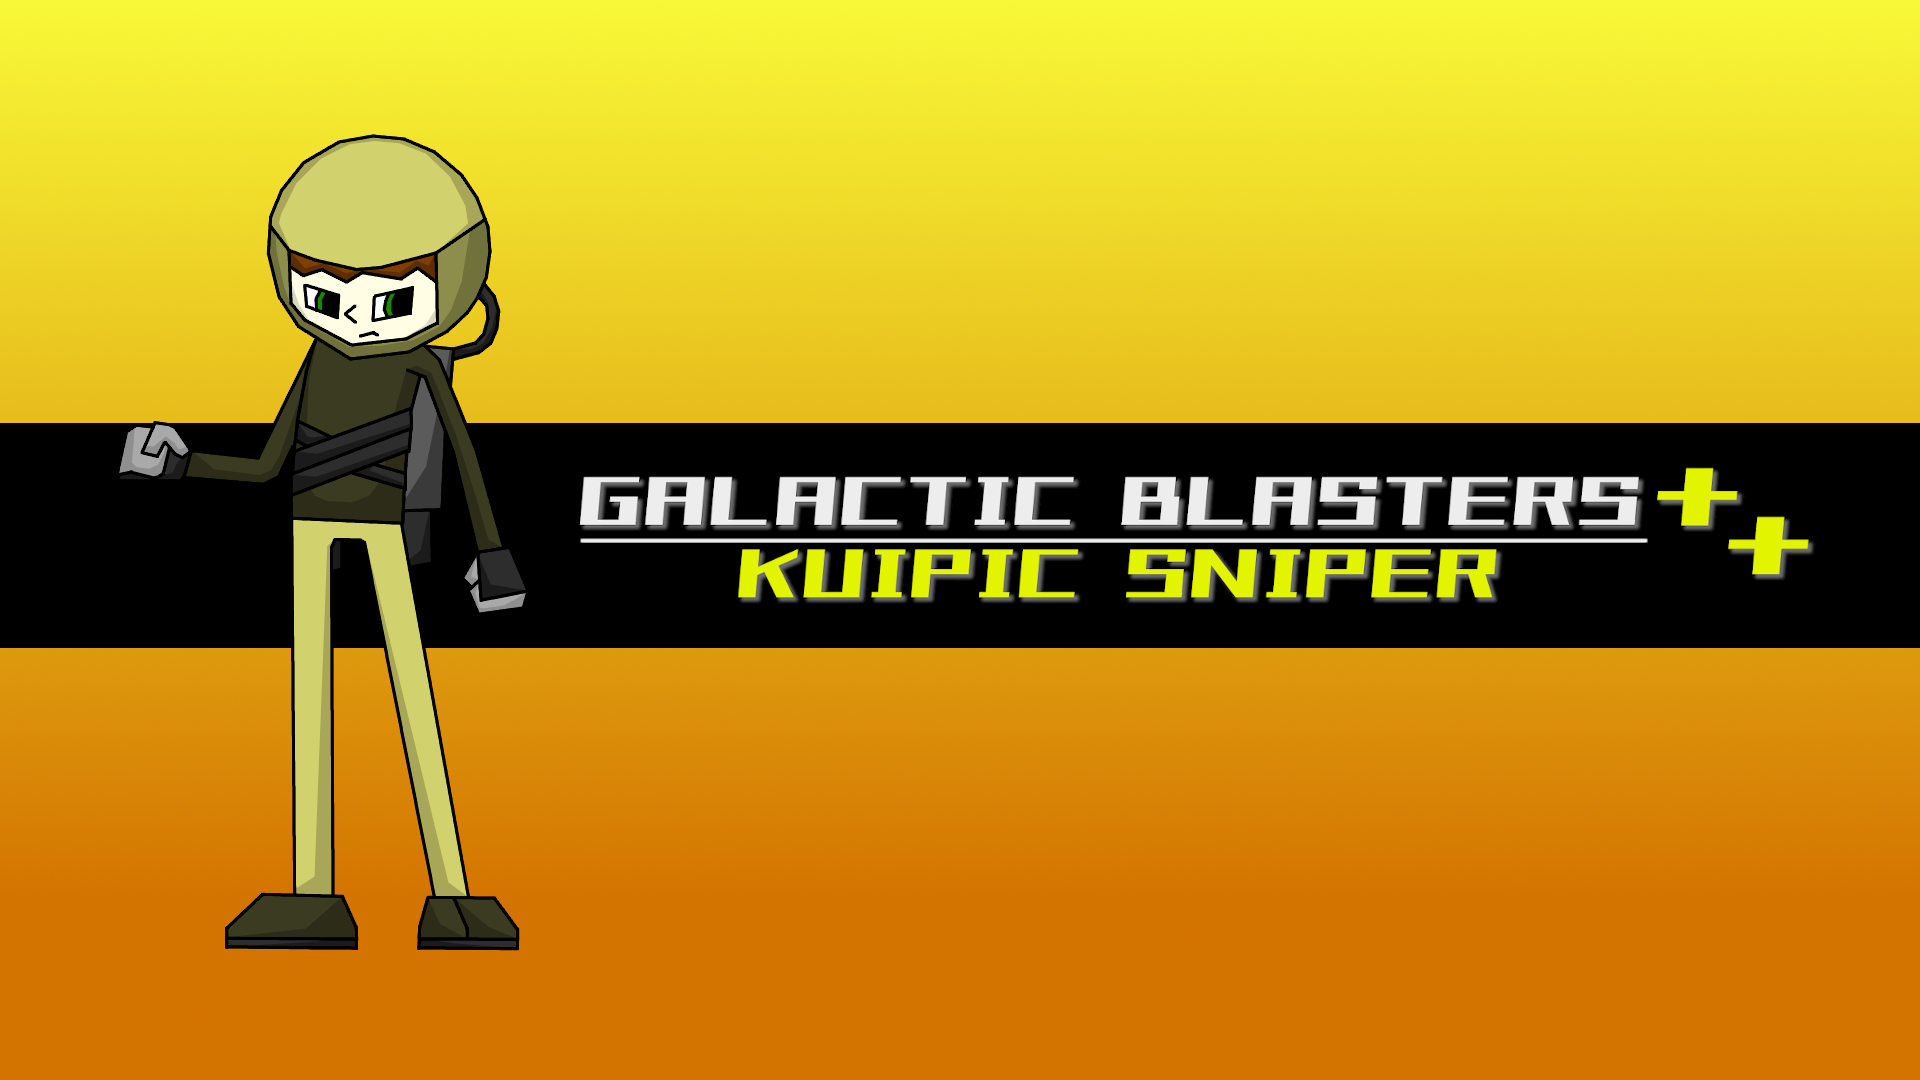 Galactic Blasters ++ - Kuipic Sniper